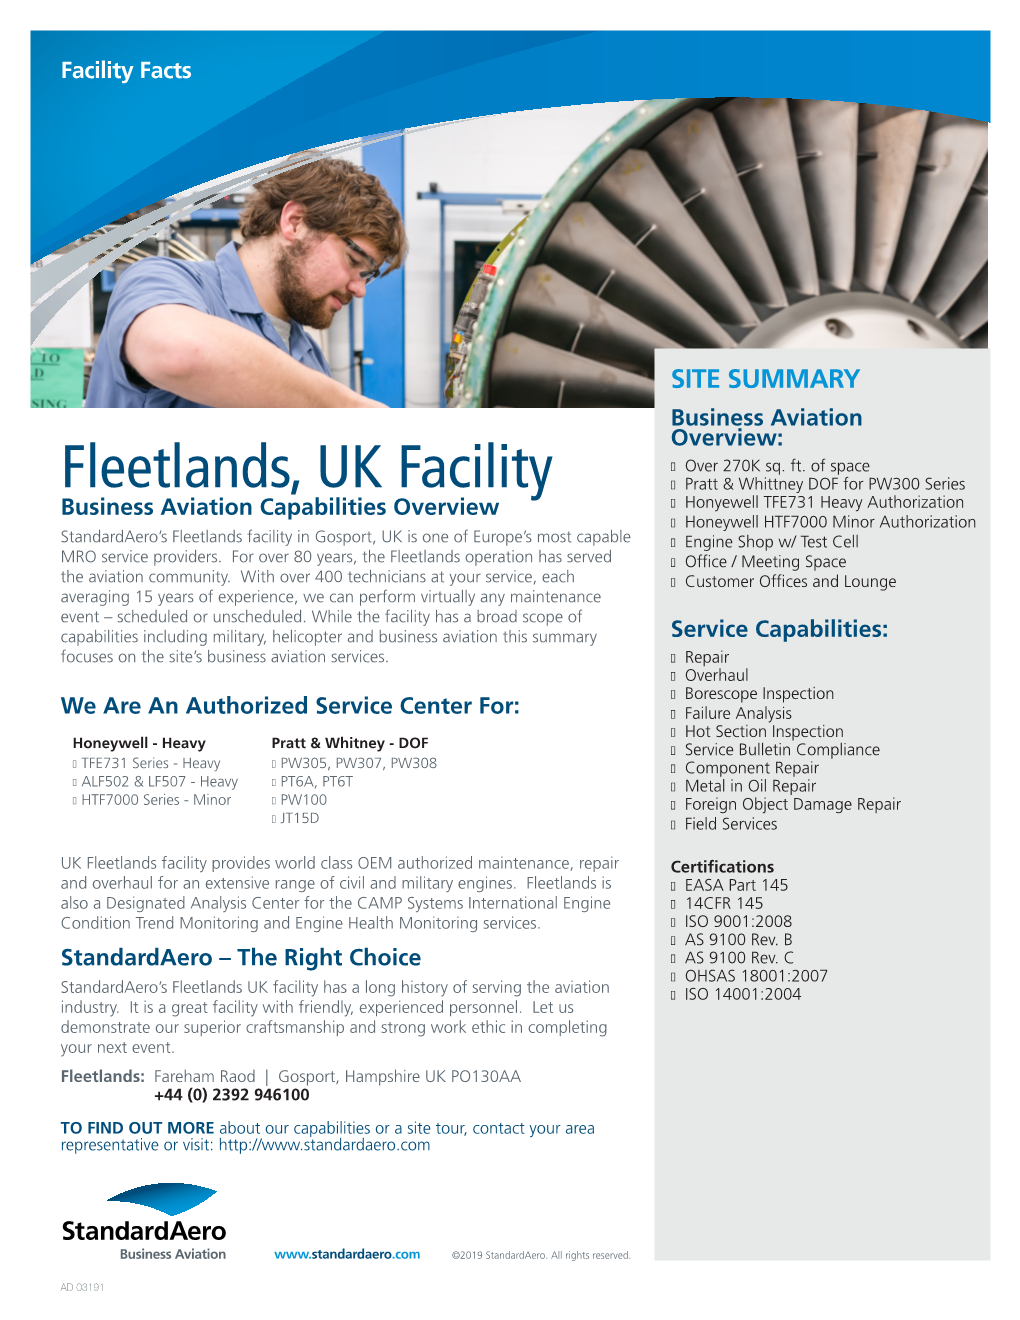 Fleetlands, UK Facility